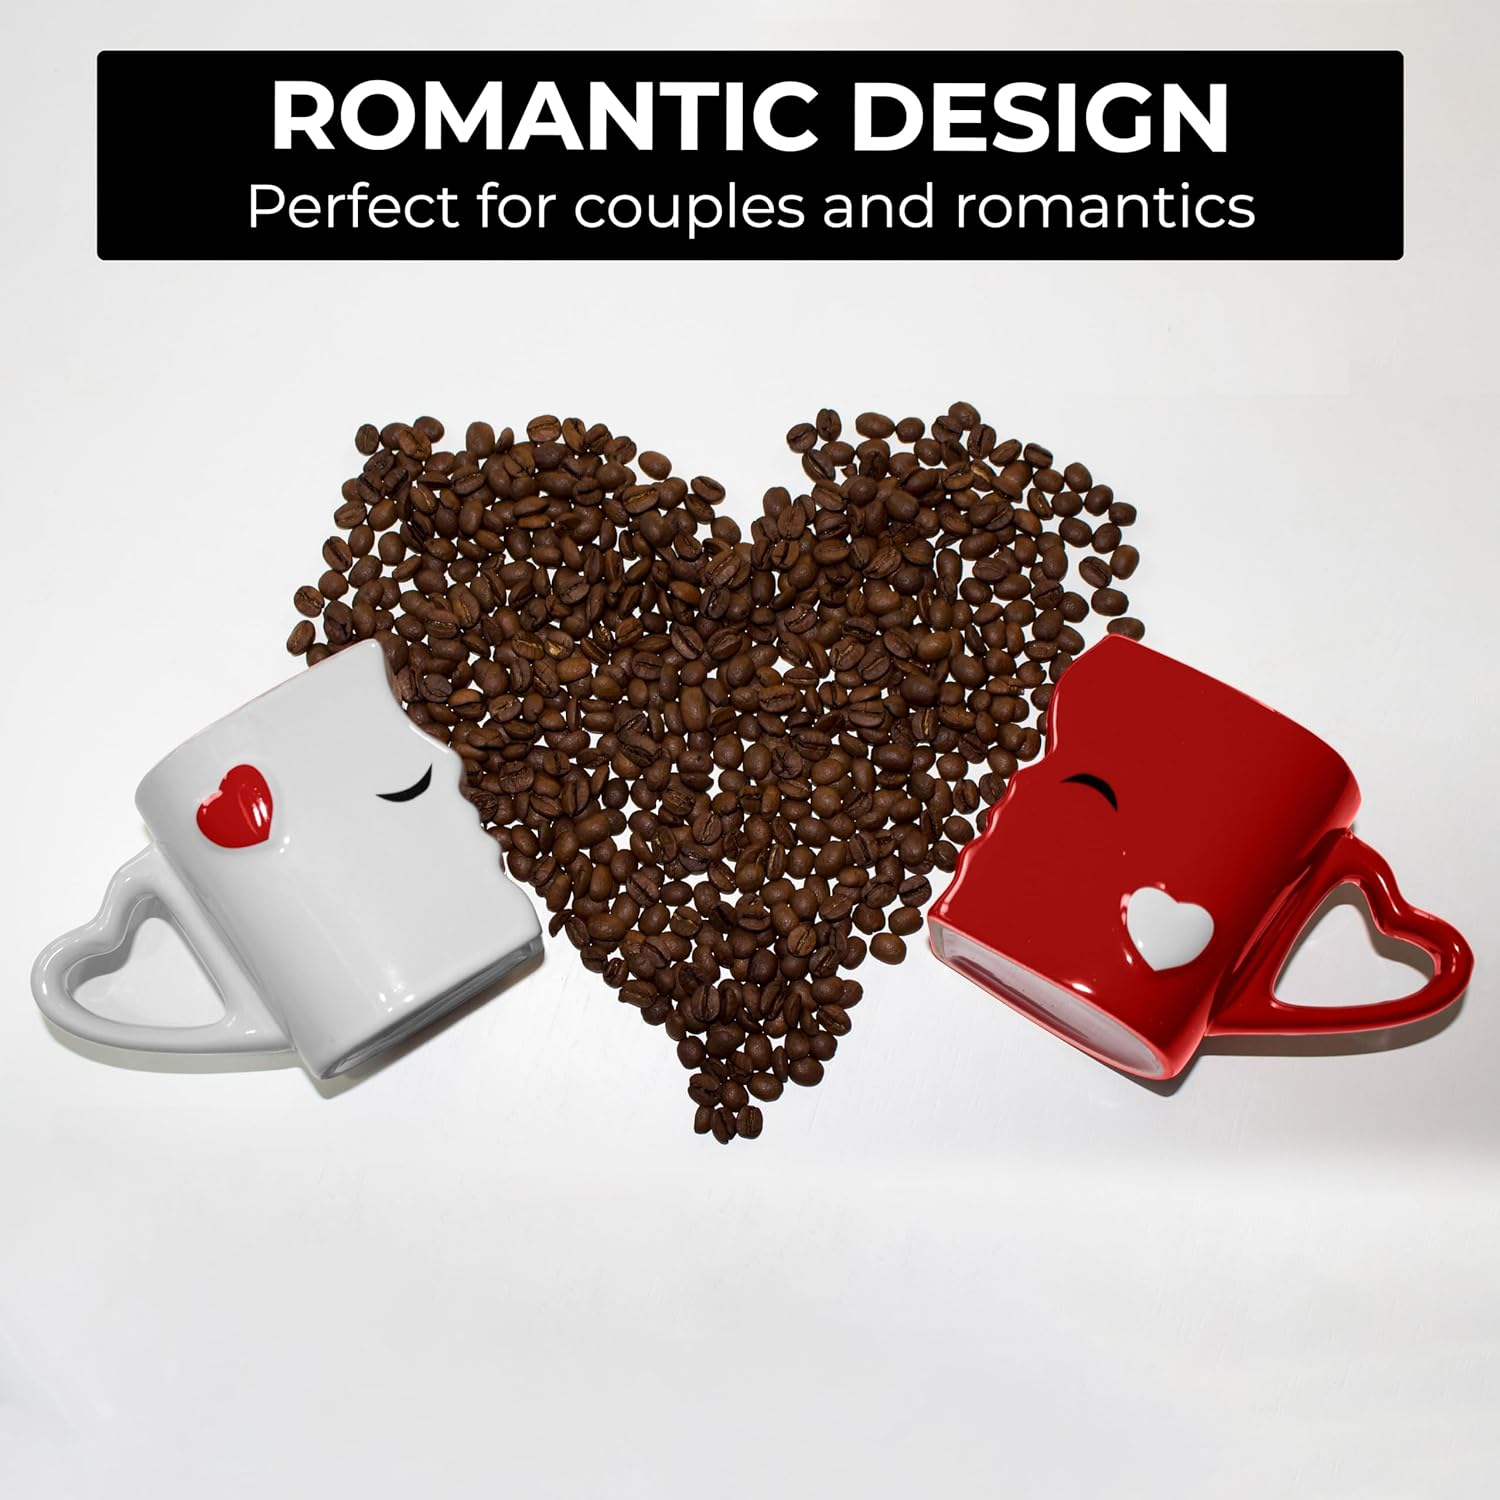 Coffee Mugs/Kissing Mugs Bridal Pair Gift Set for Weddings/Birthday/Anniversary with Gift Box